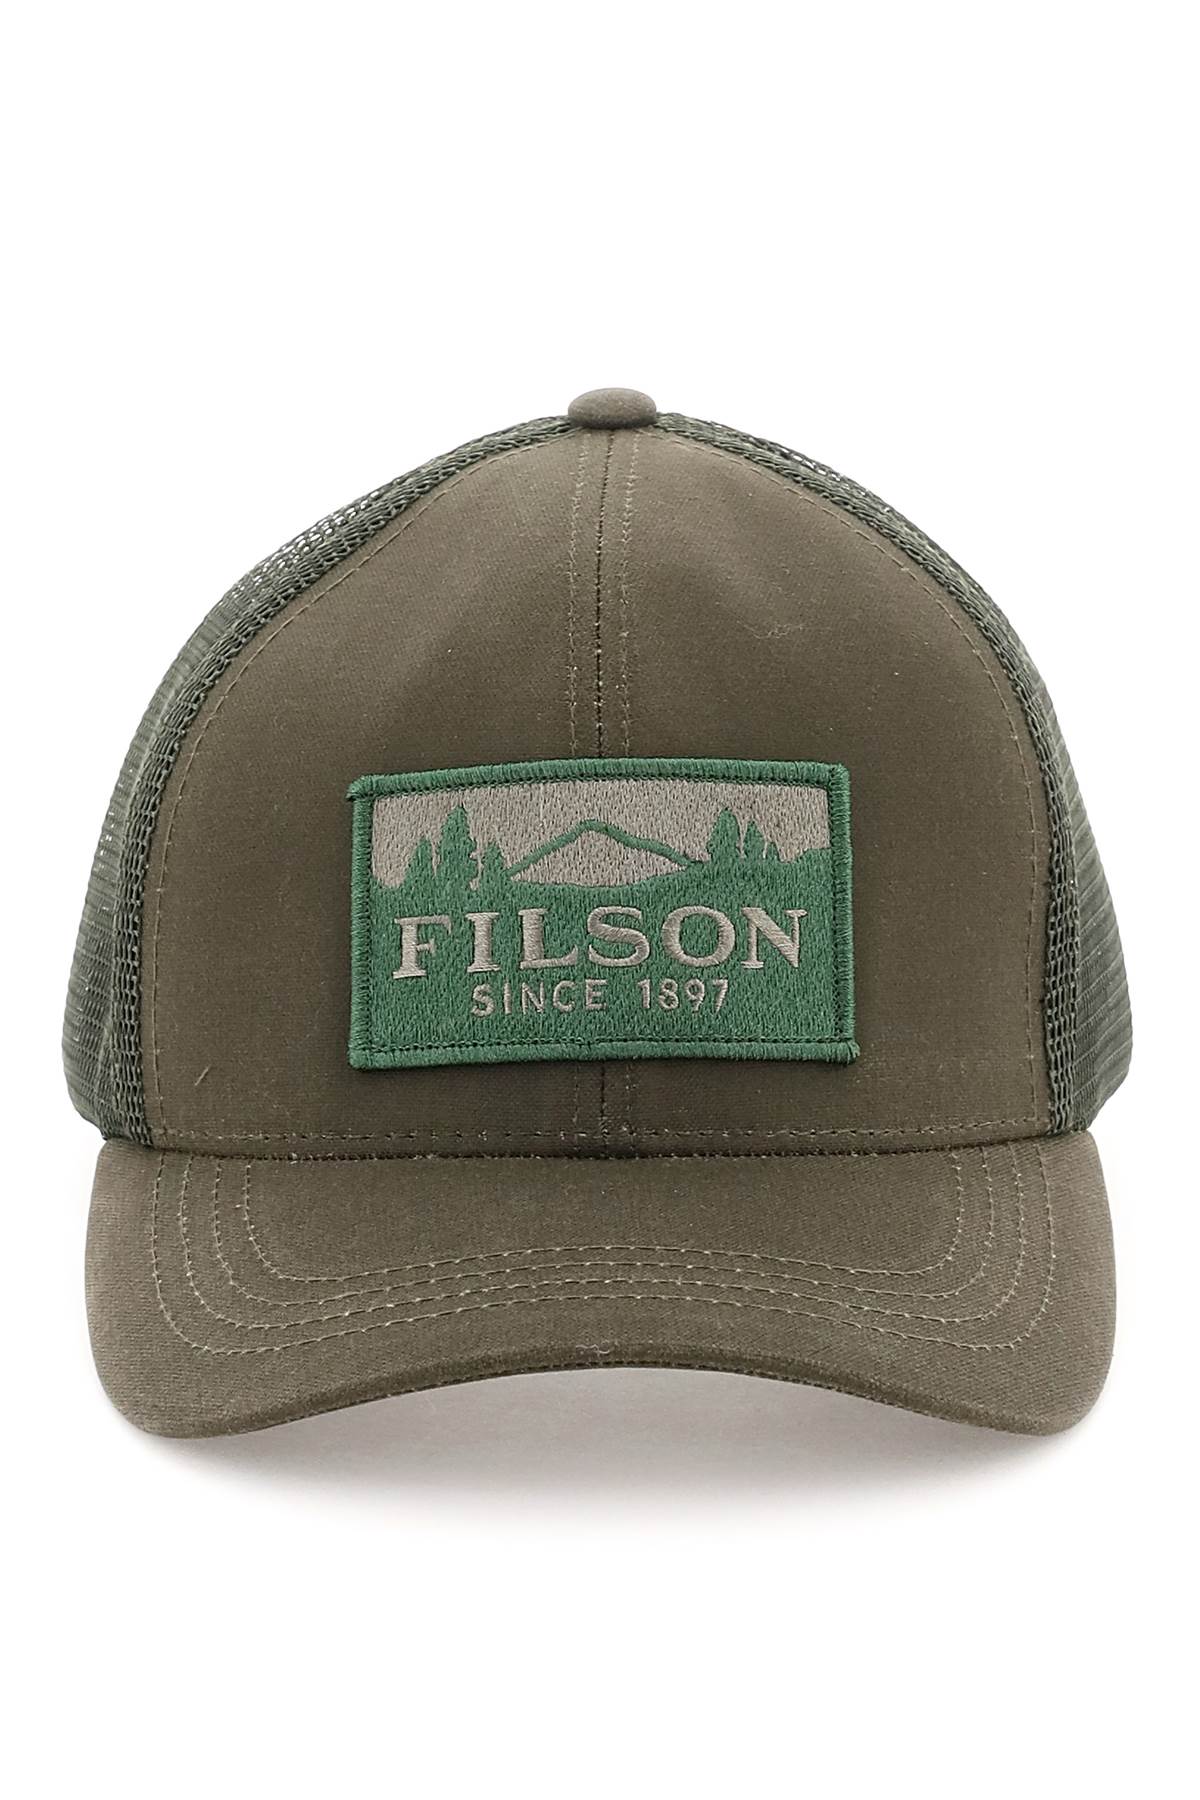 Filson Logger Trucker Cap